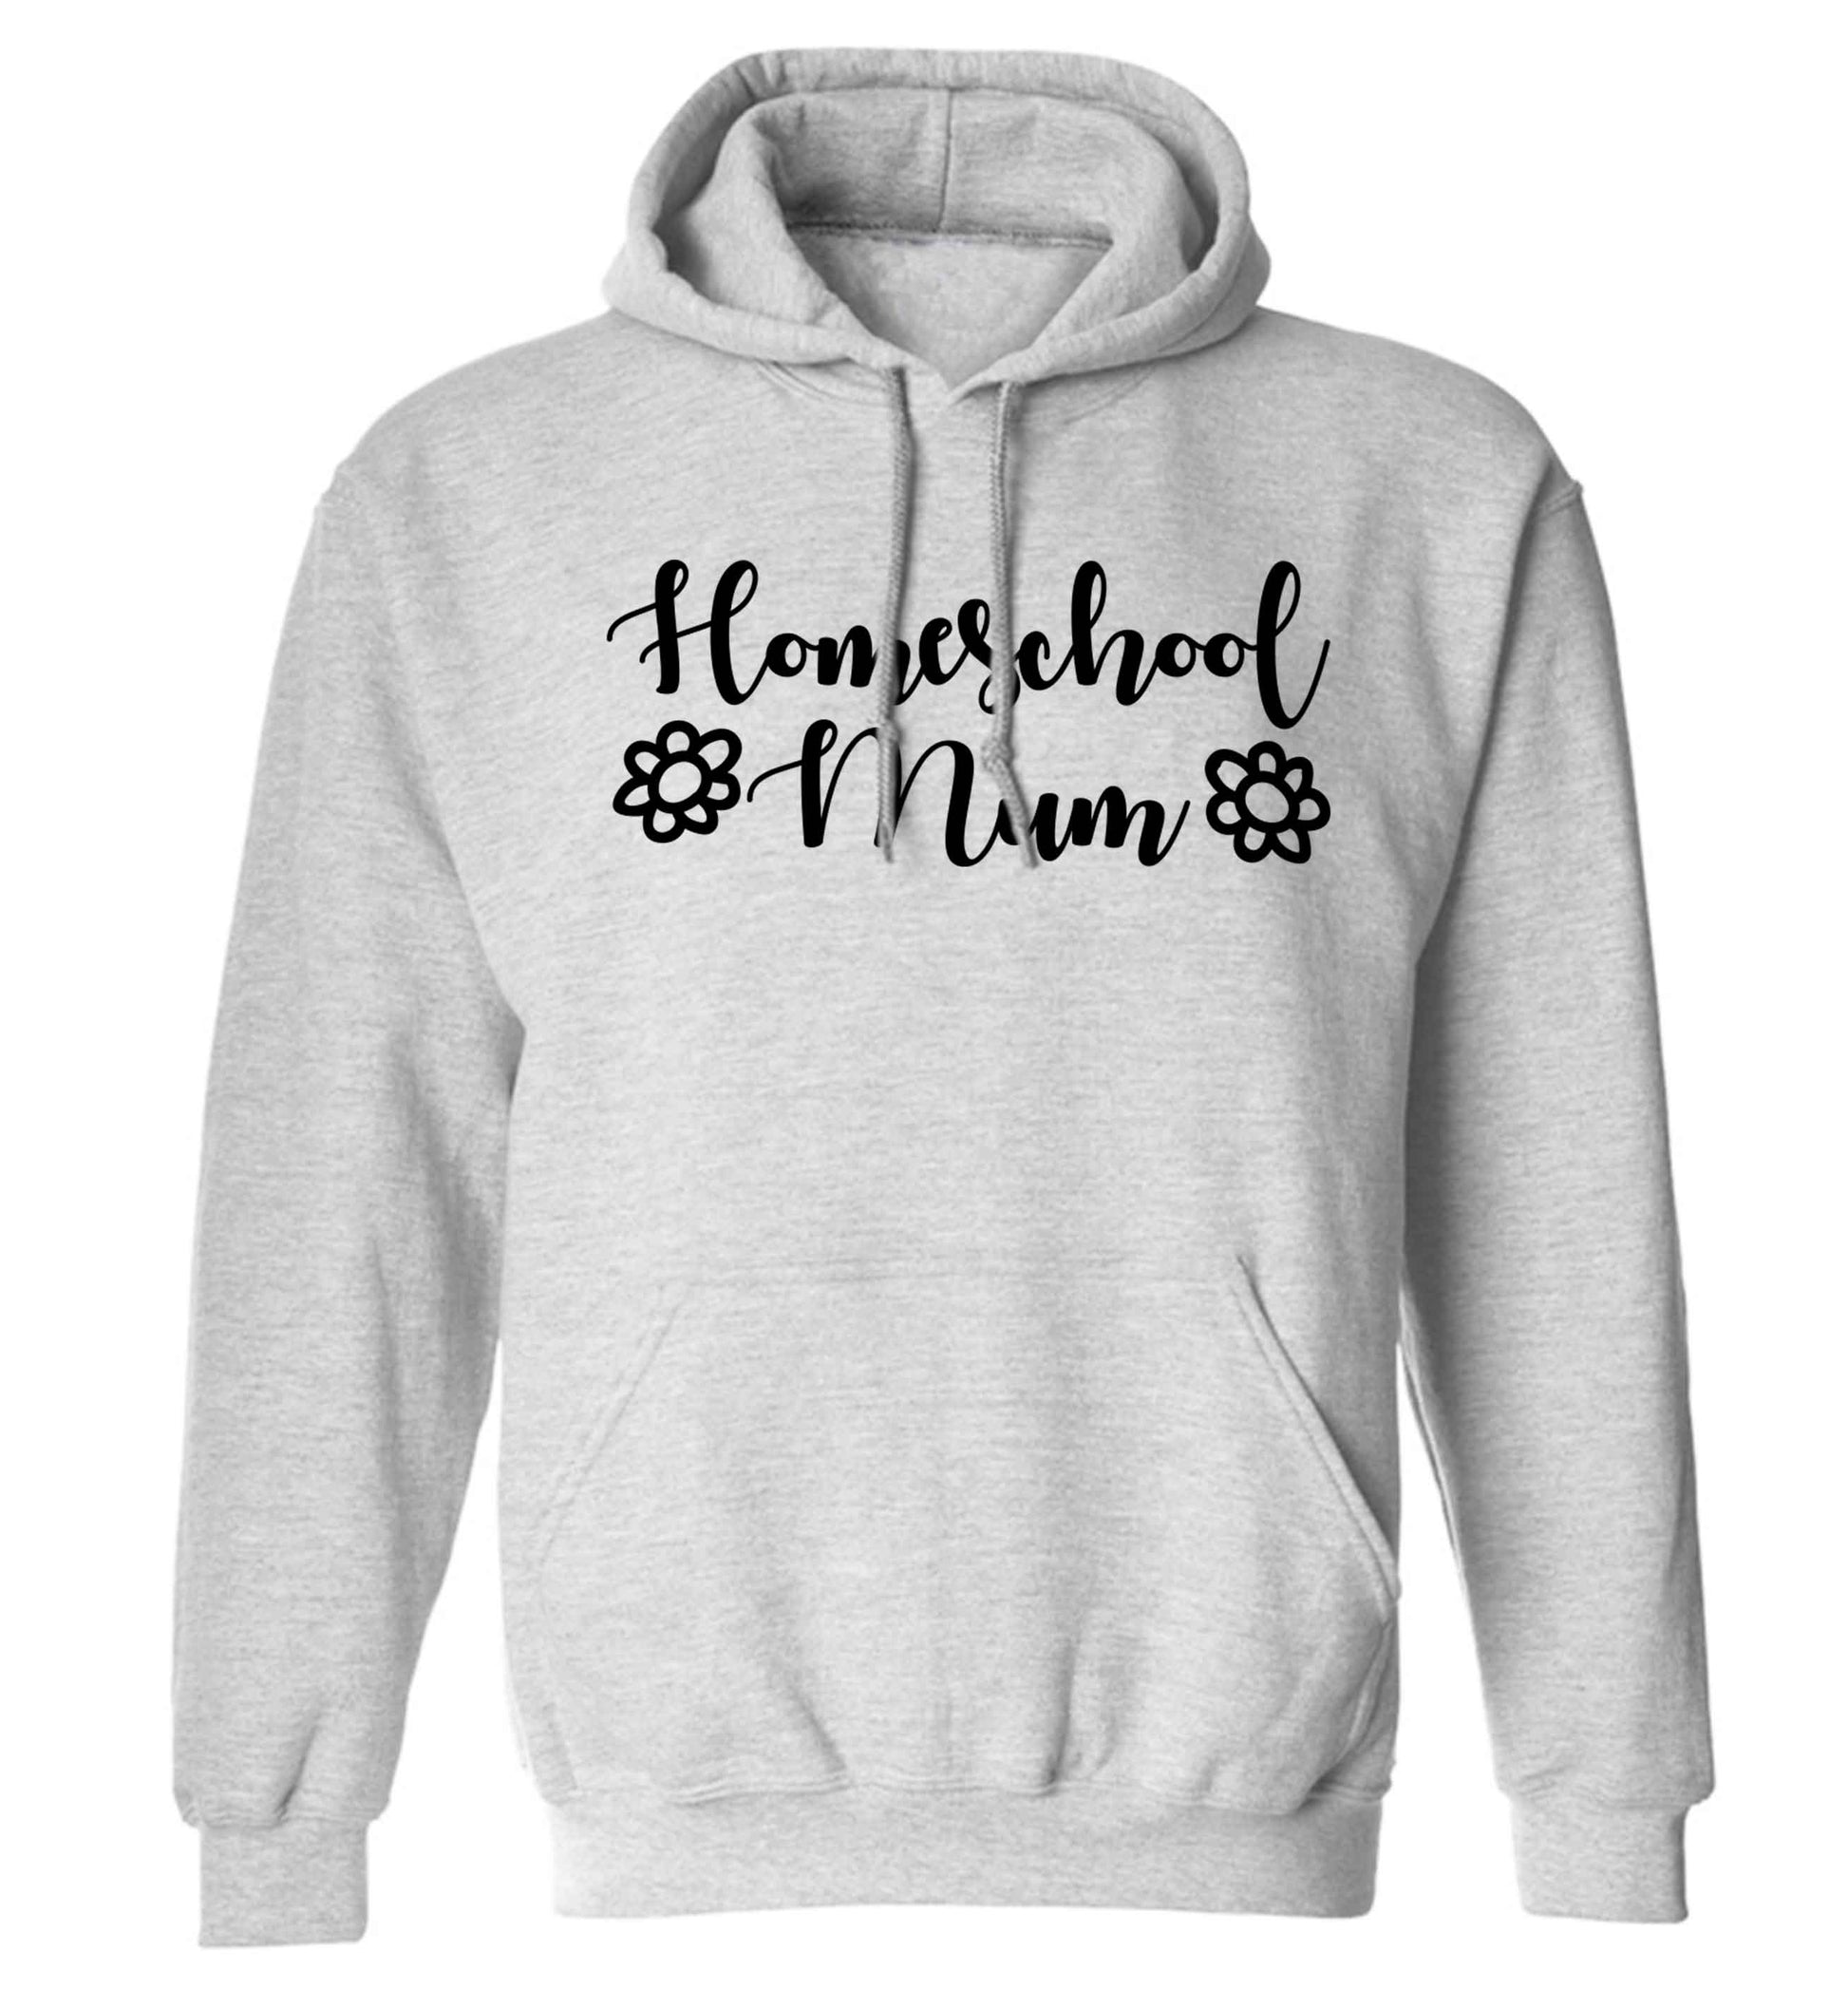 Homeschool mum adults unisex grey hoodie 2XL